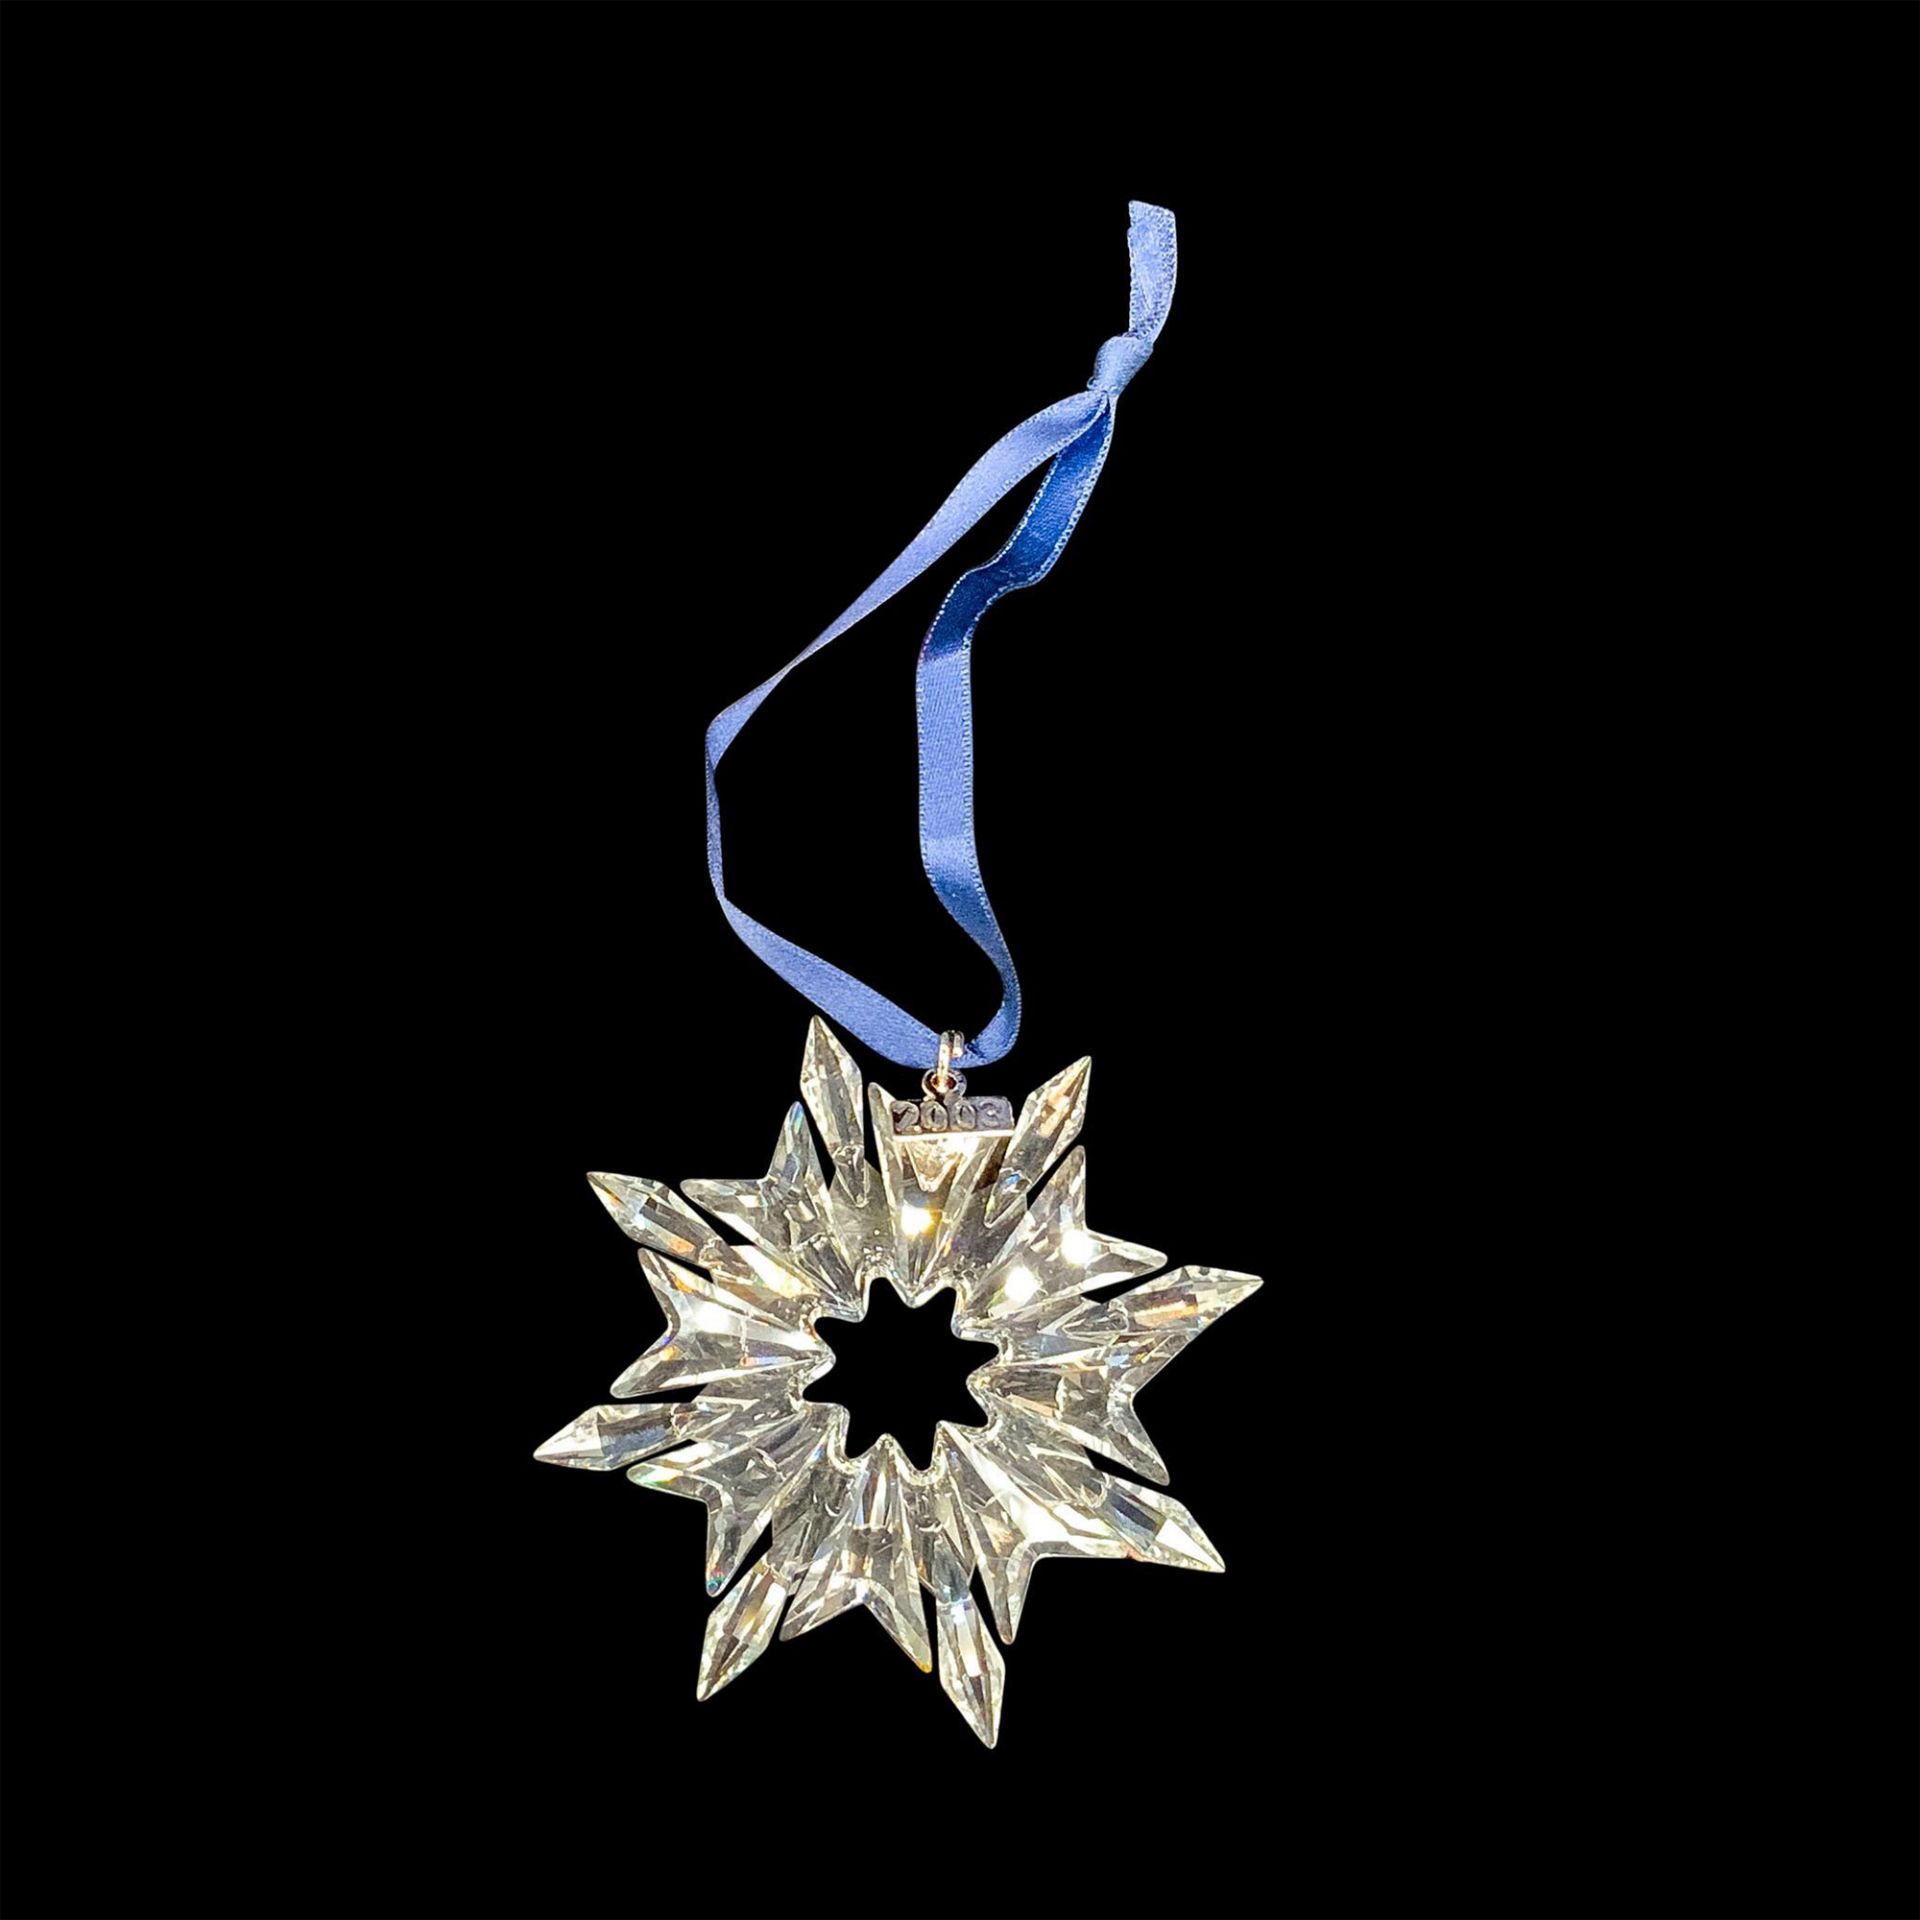 Swarovski Crystal 2003 Annual Christmas Ornament - Image 2 of 3